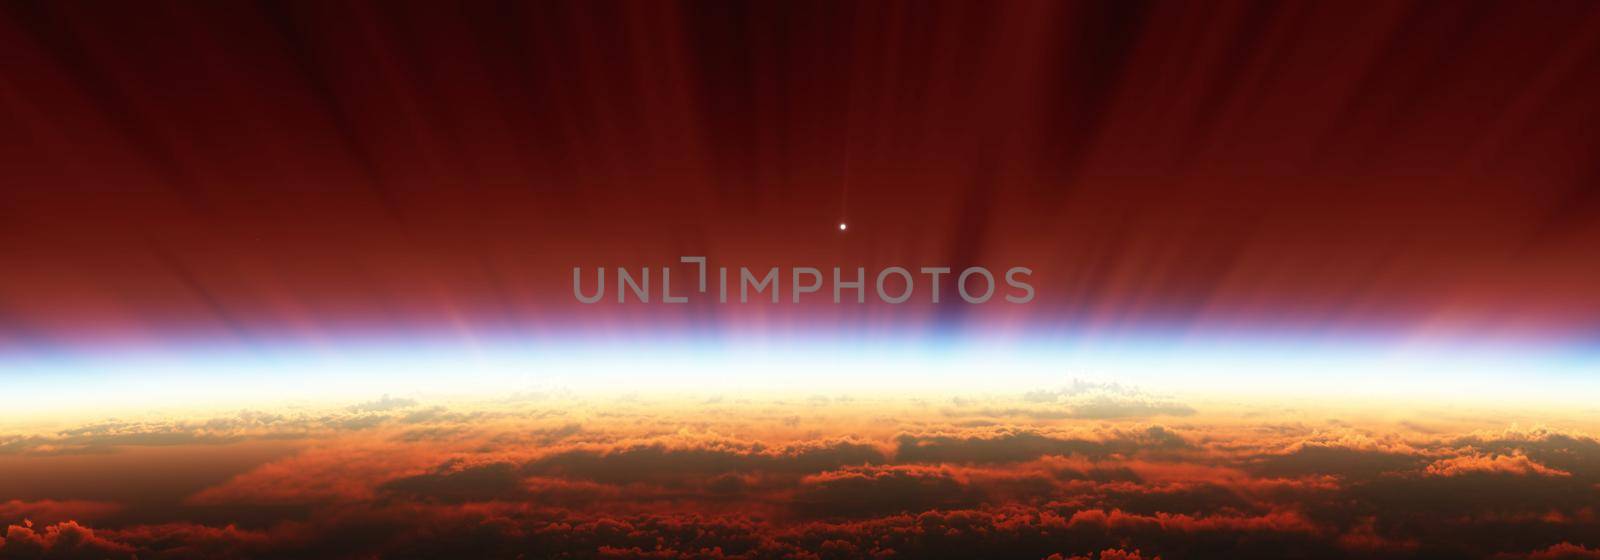 sunrise from space aurora, 3d rendering illustration